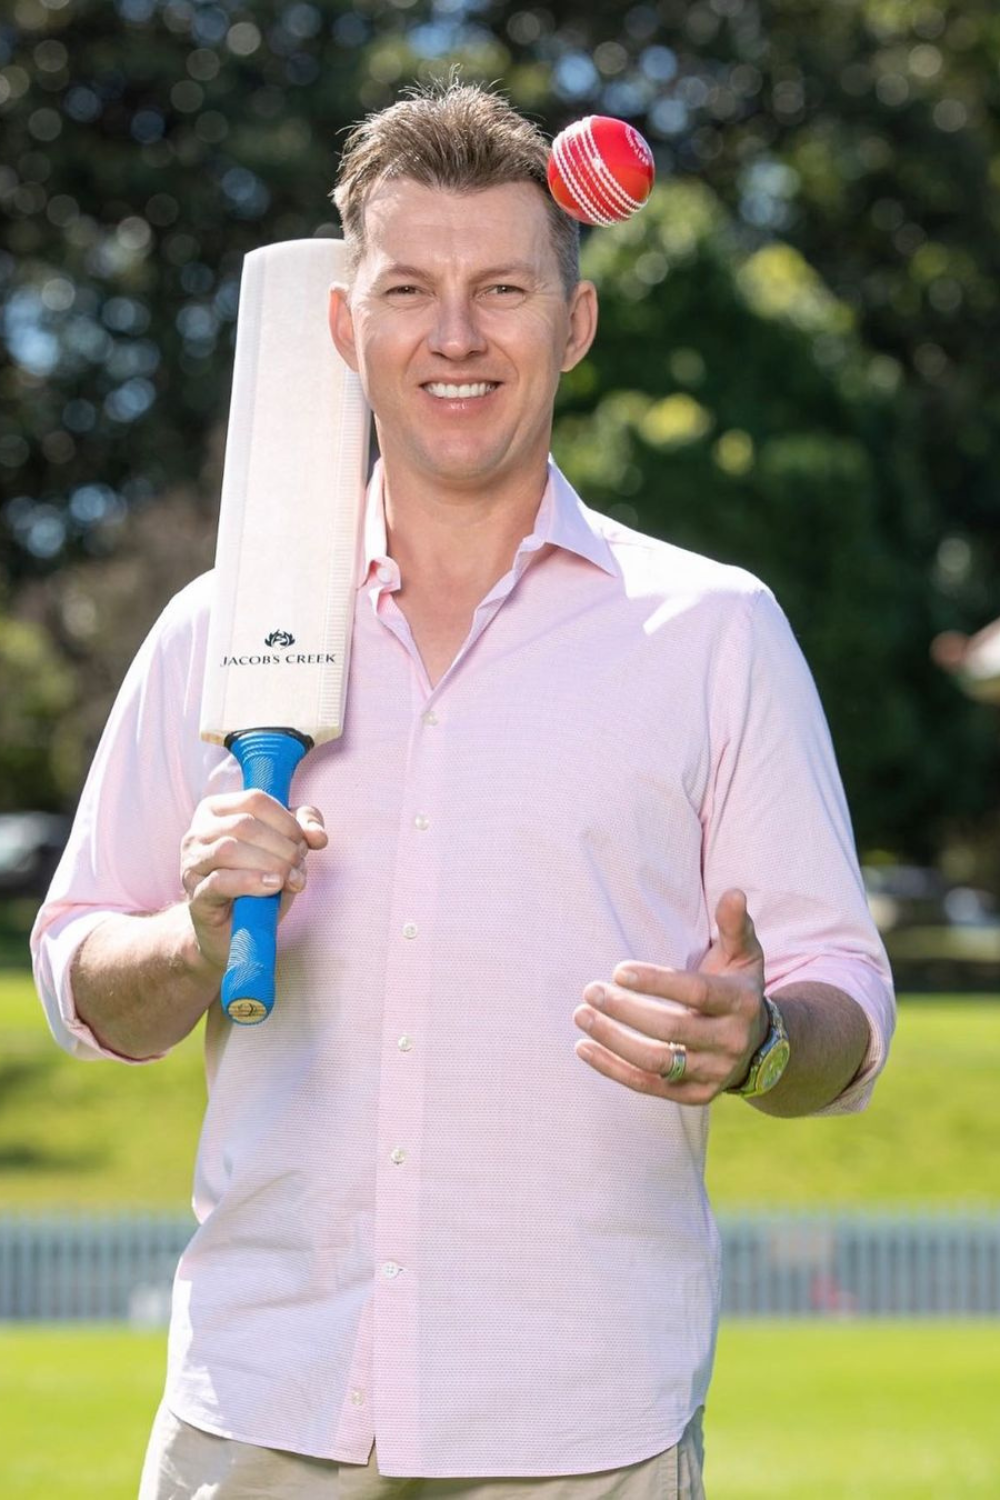 Brett Lee, An Australian Former Professional Cricket Bowler